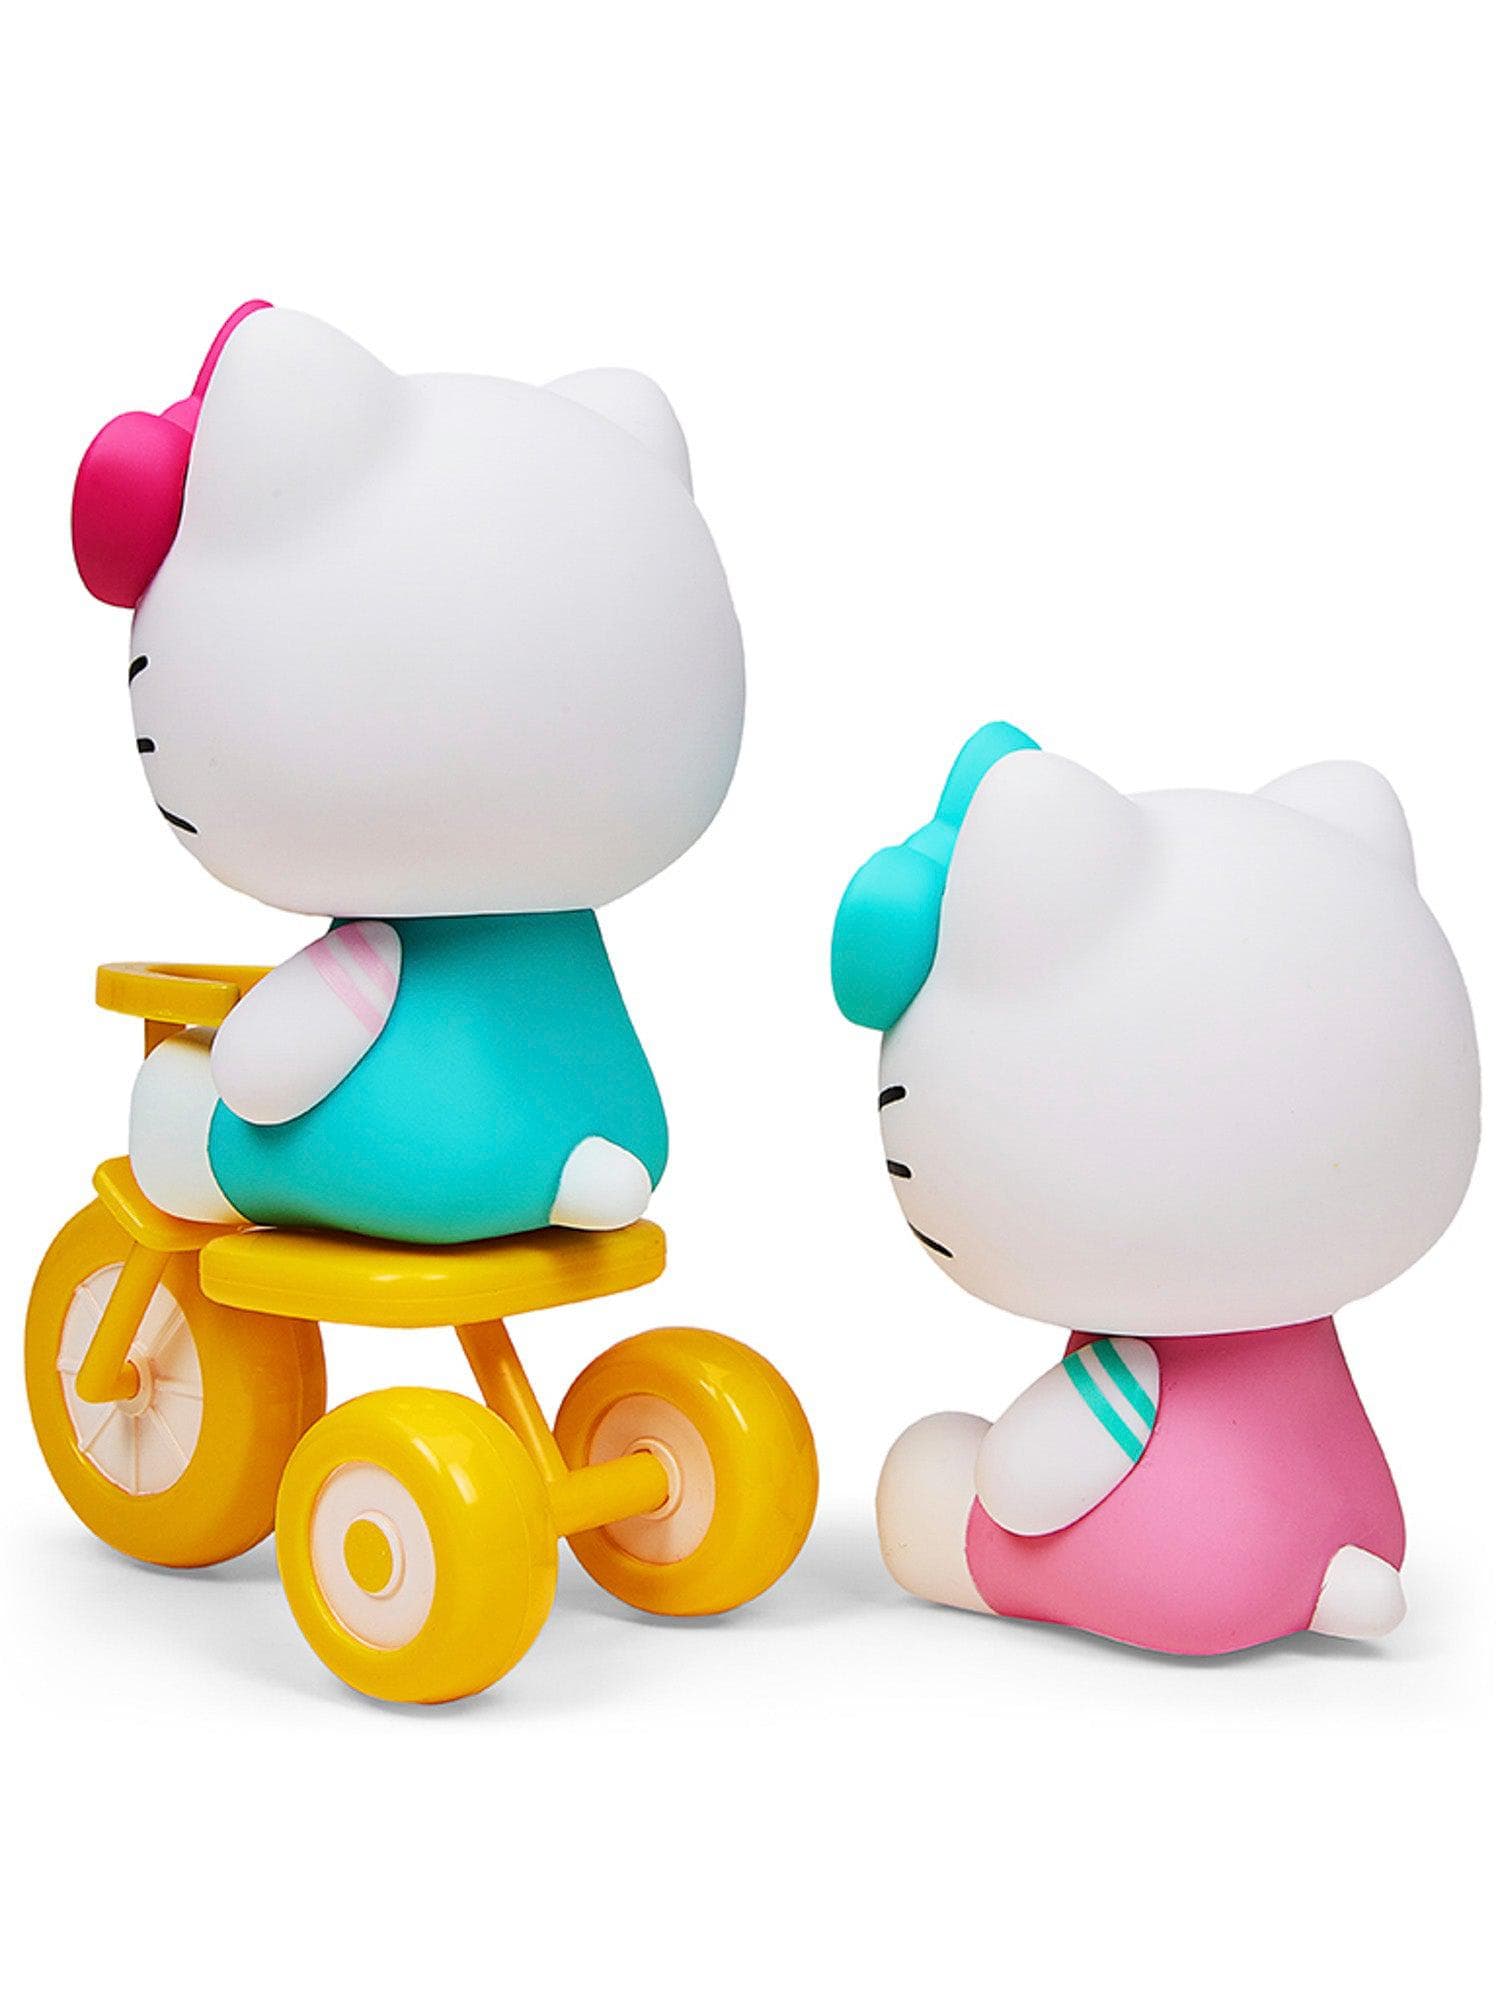 Kidrobot - Sanrio - 4.5” Vinyl Figures - Hello Kitty Play Theme 2 Pack “Tricycle and Ice-Cream” - costumes.com